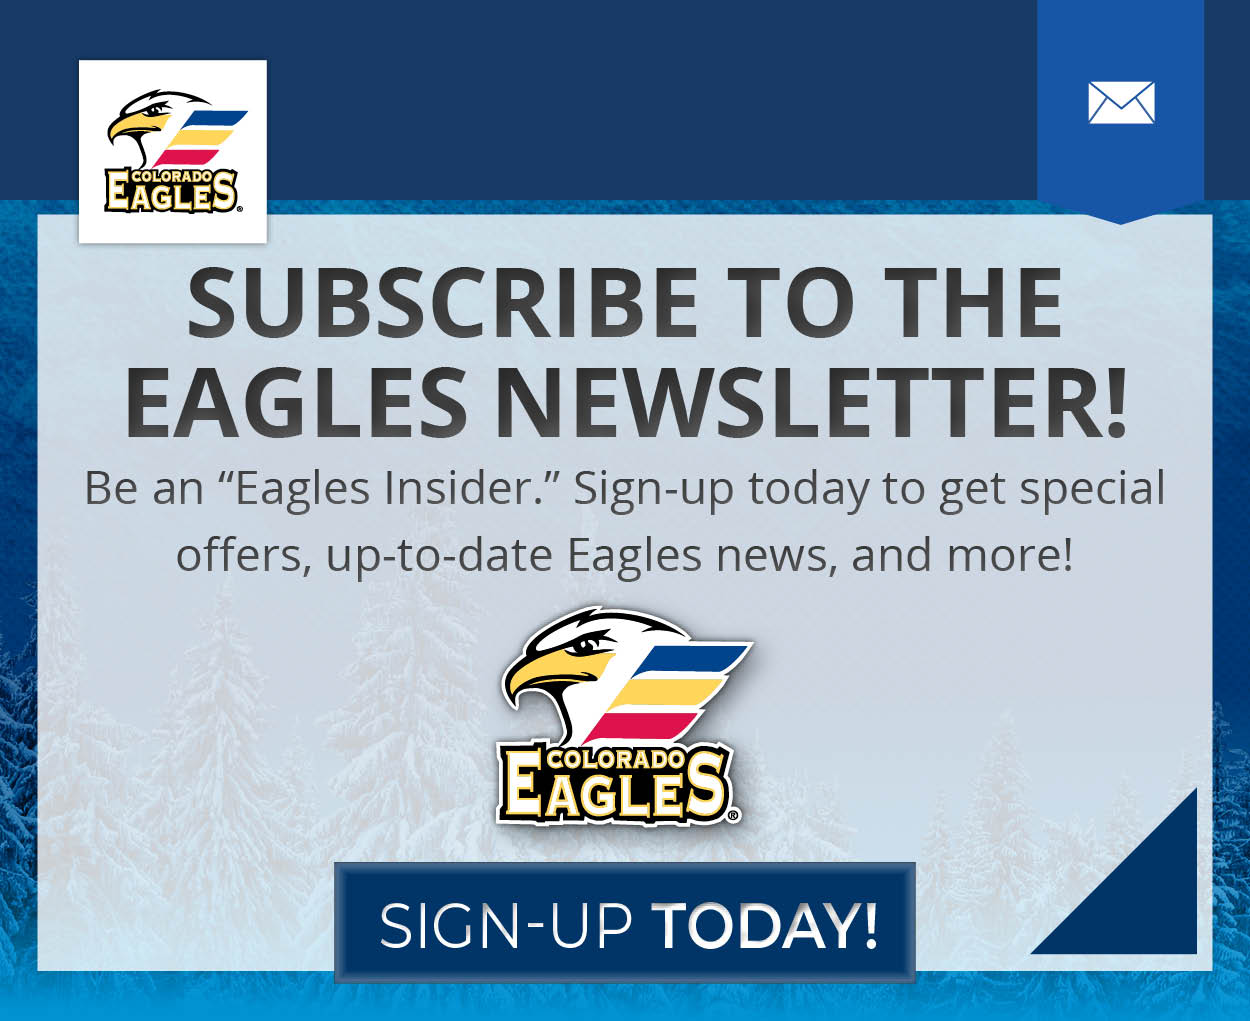 Colorado Eagles – The Official Online Store of the Colorado Eagles